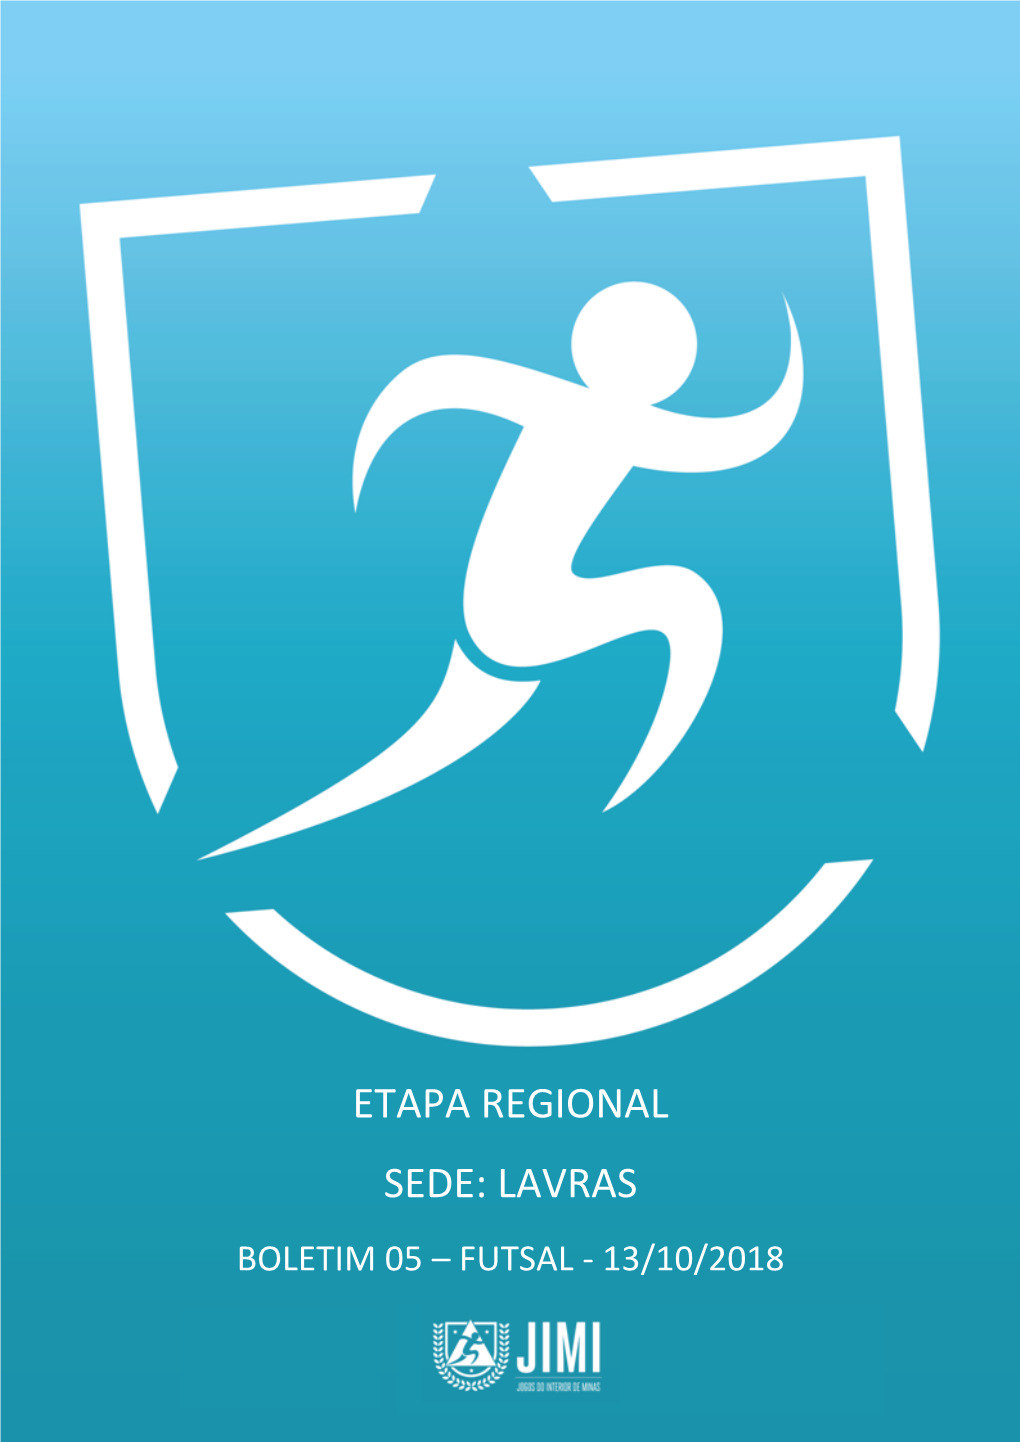 Etapa Regional Sede: Lavras Boletim 05 – Futsal - 13/10/2018